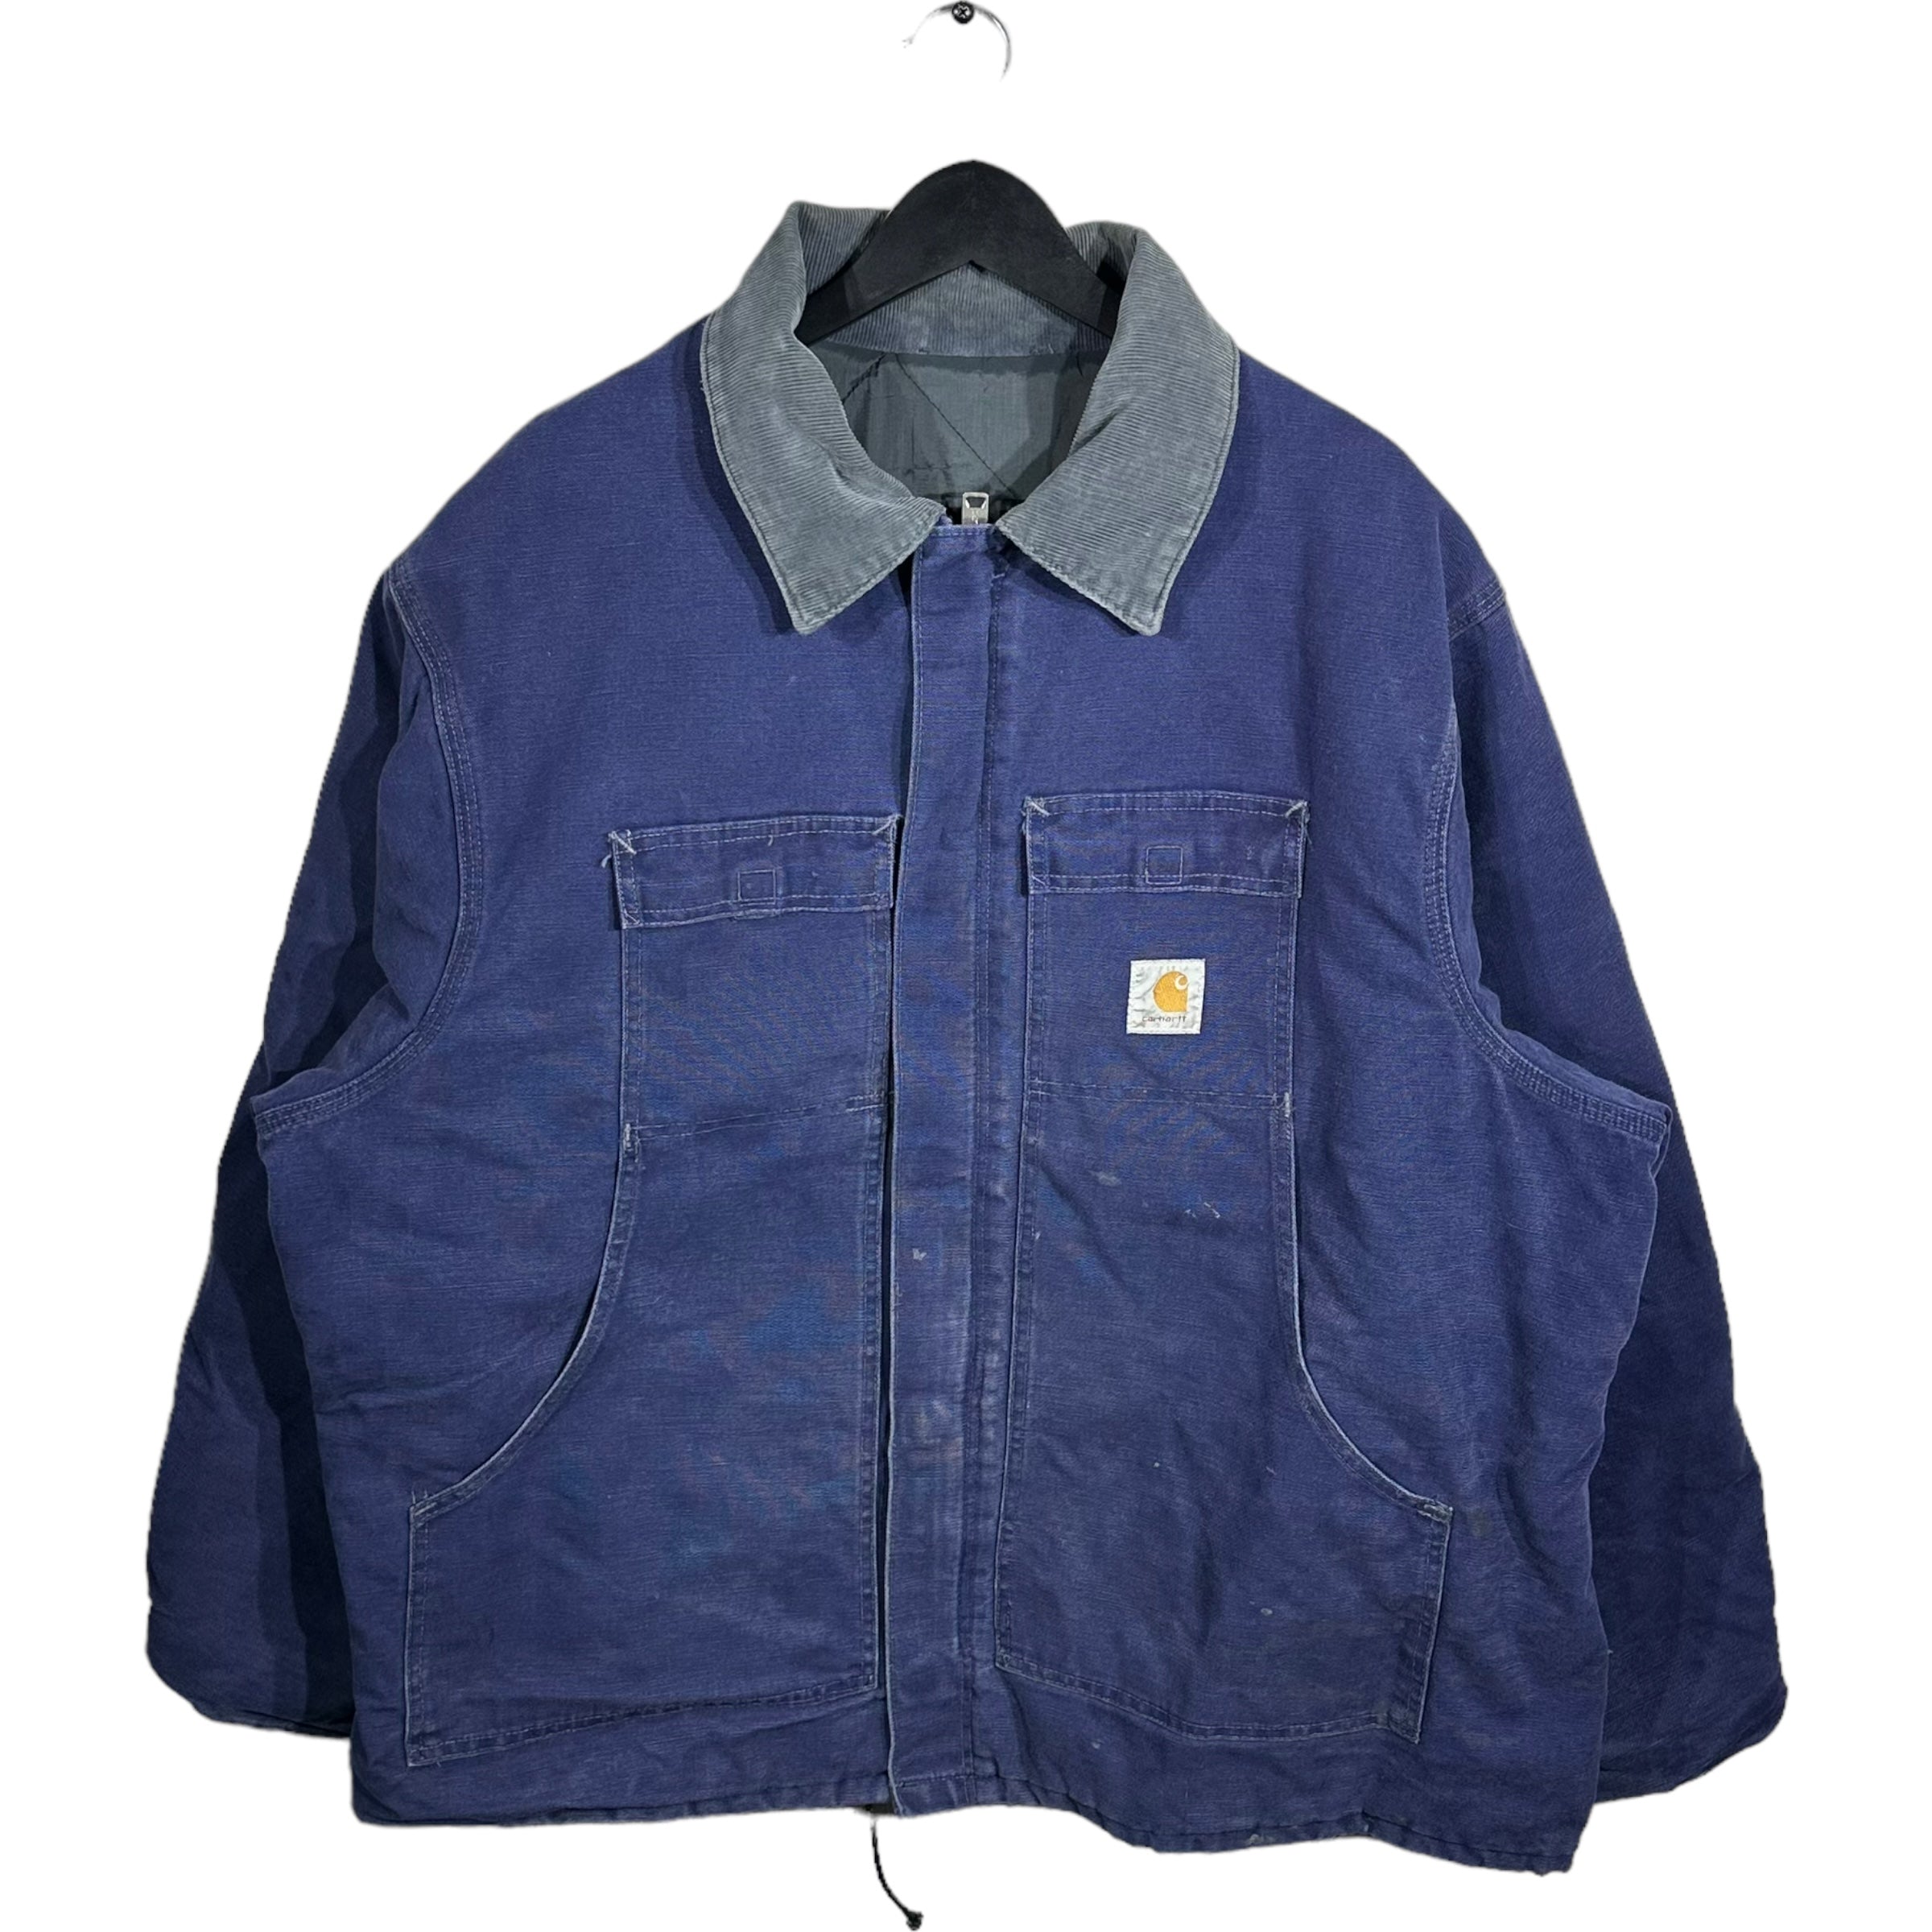 Vintage Carhartt Full Zip Workwear Jacket